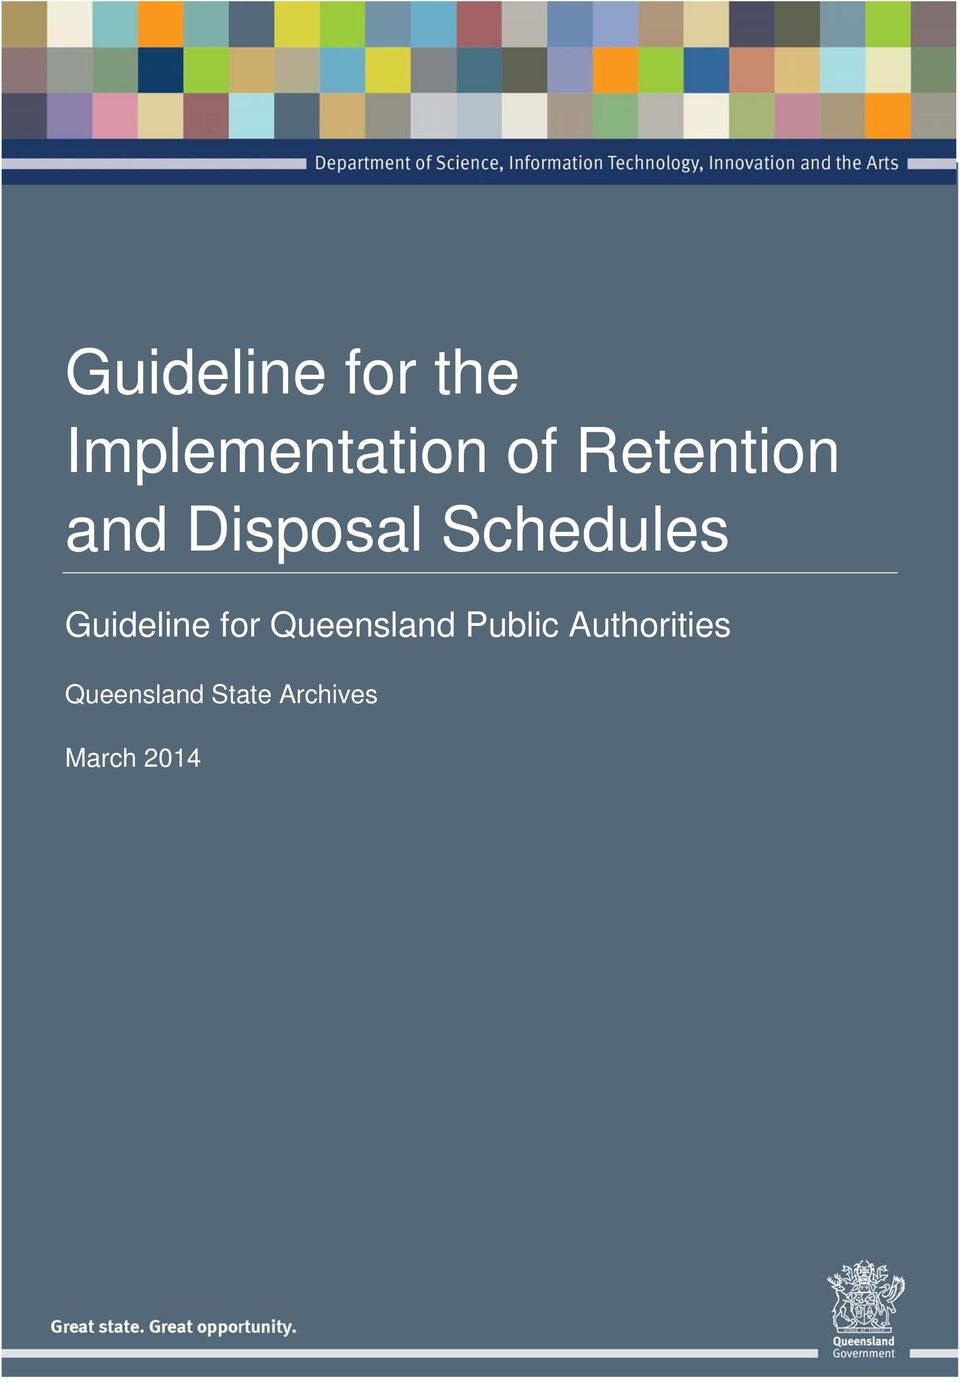 Guideline for Queensland Public